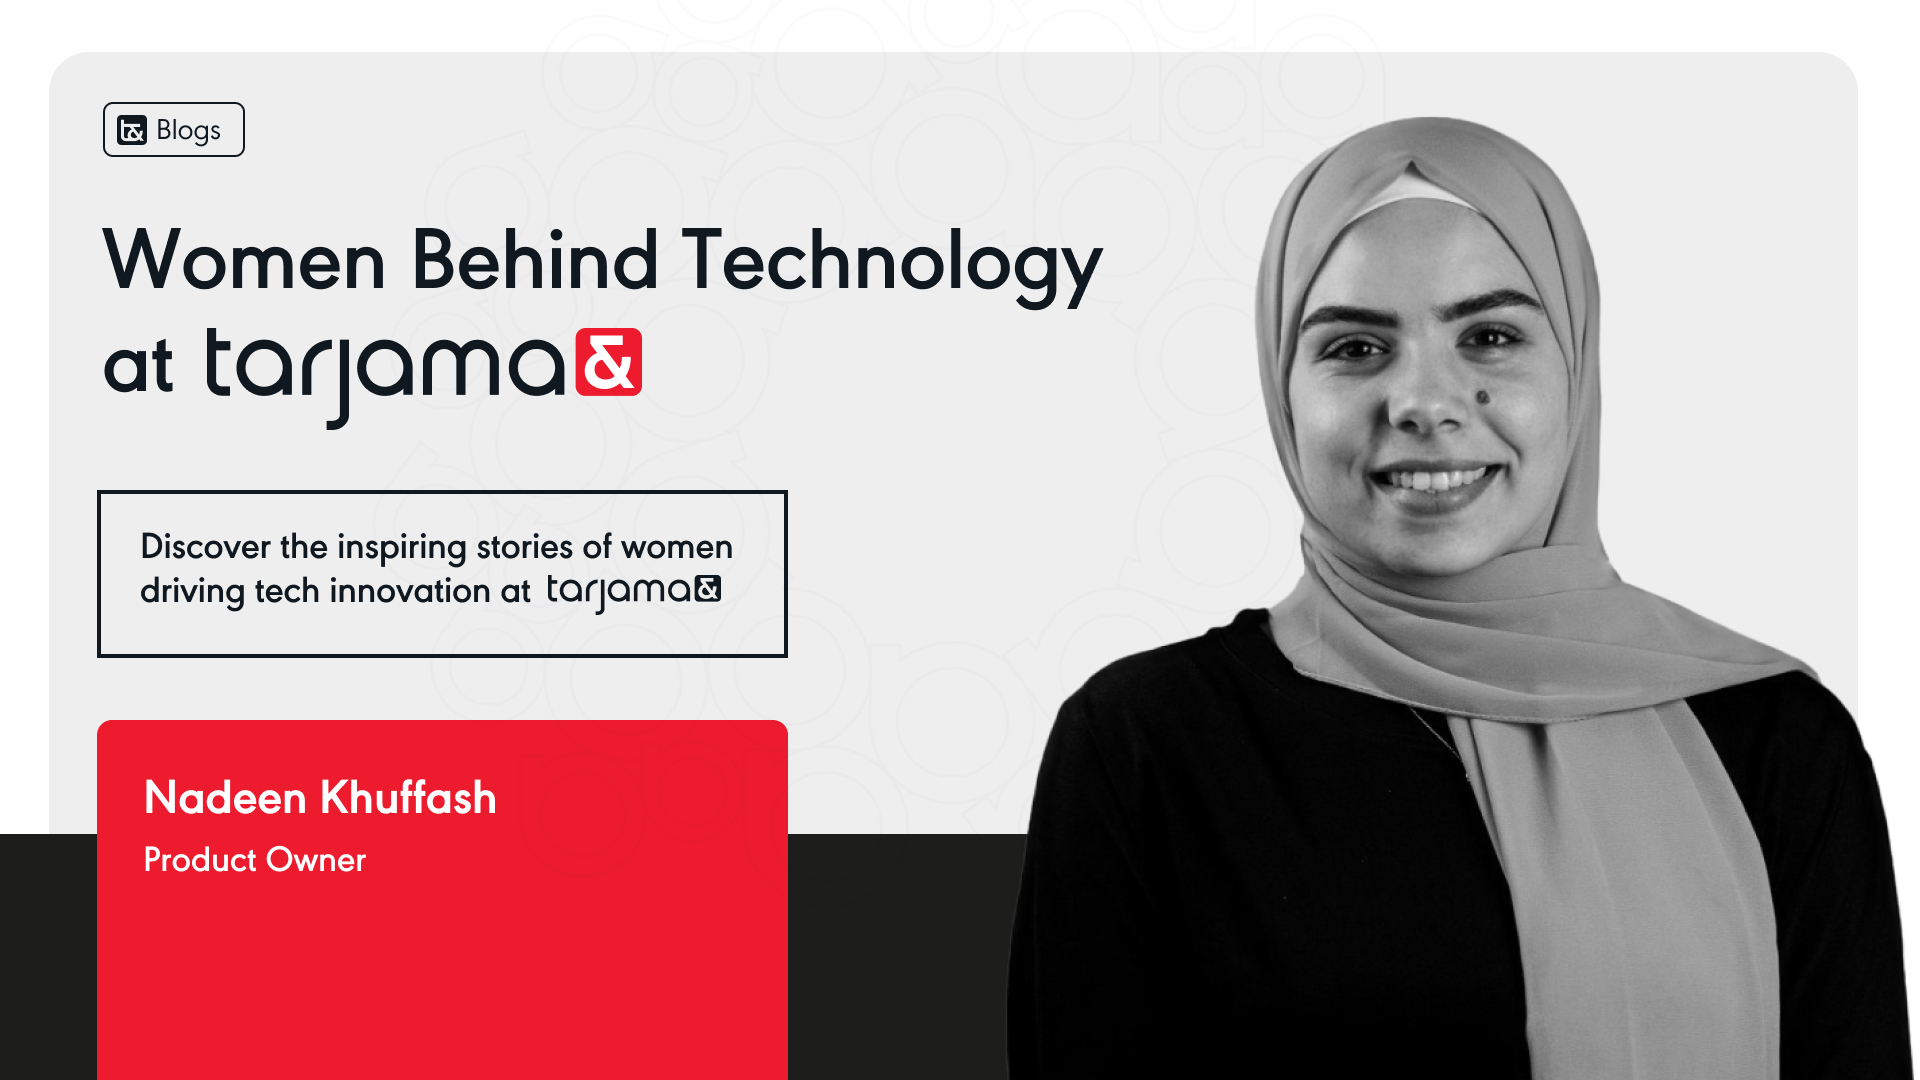 Women behind Technology at Tarjama& – Featuring Nadeen Khuffash - Product Owner at Tarjama&